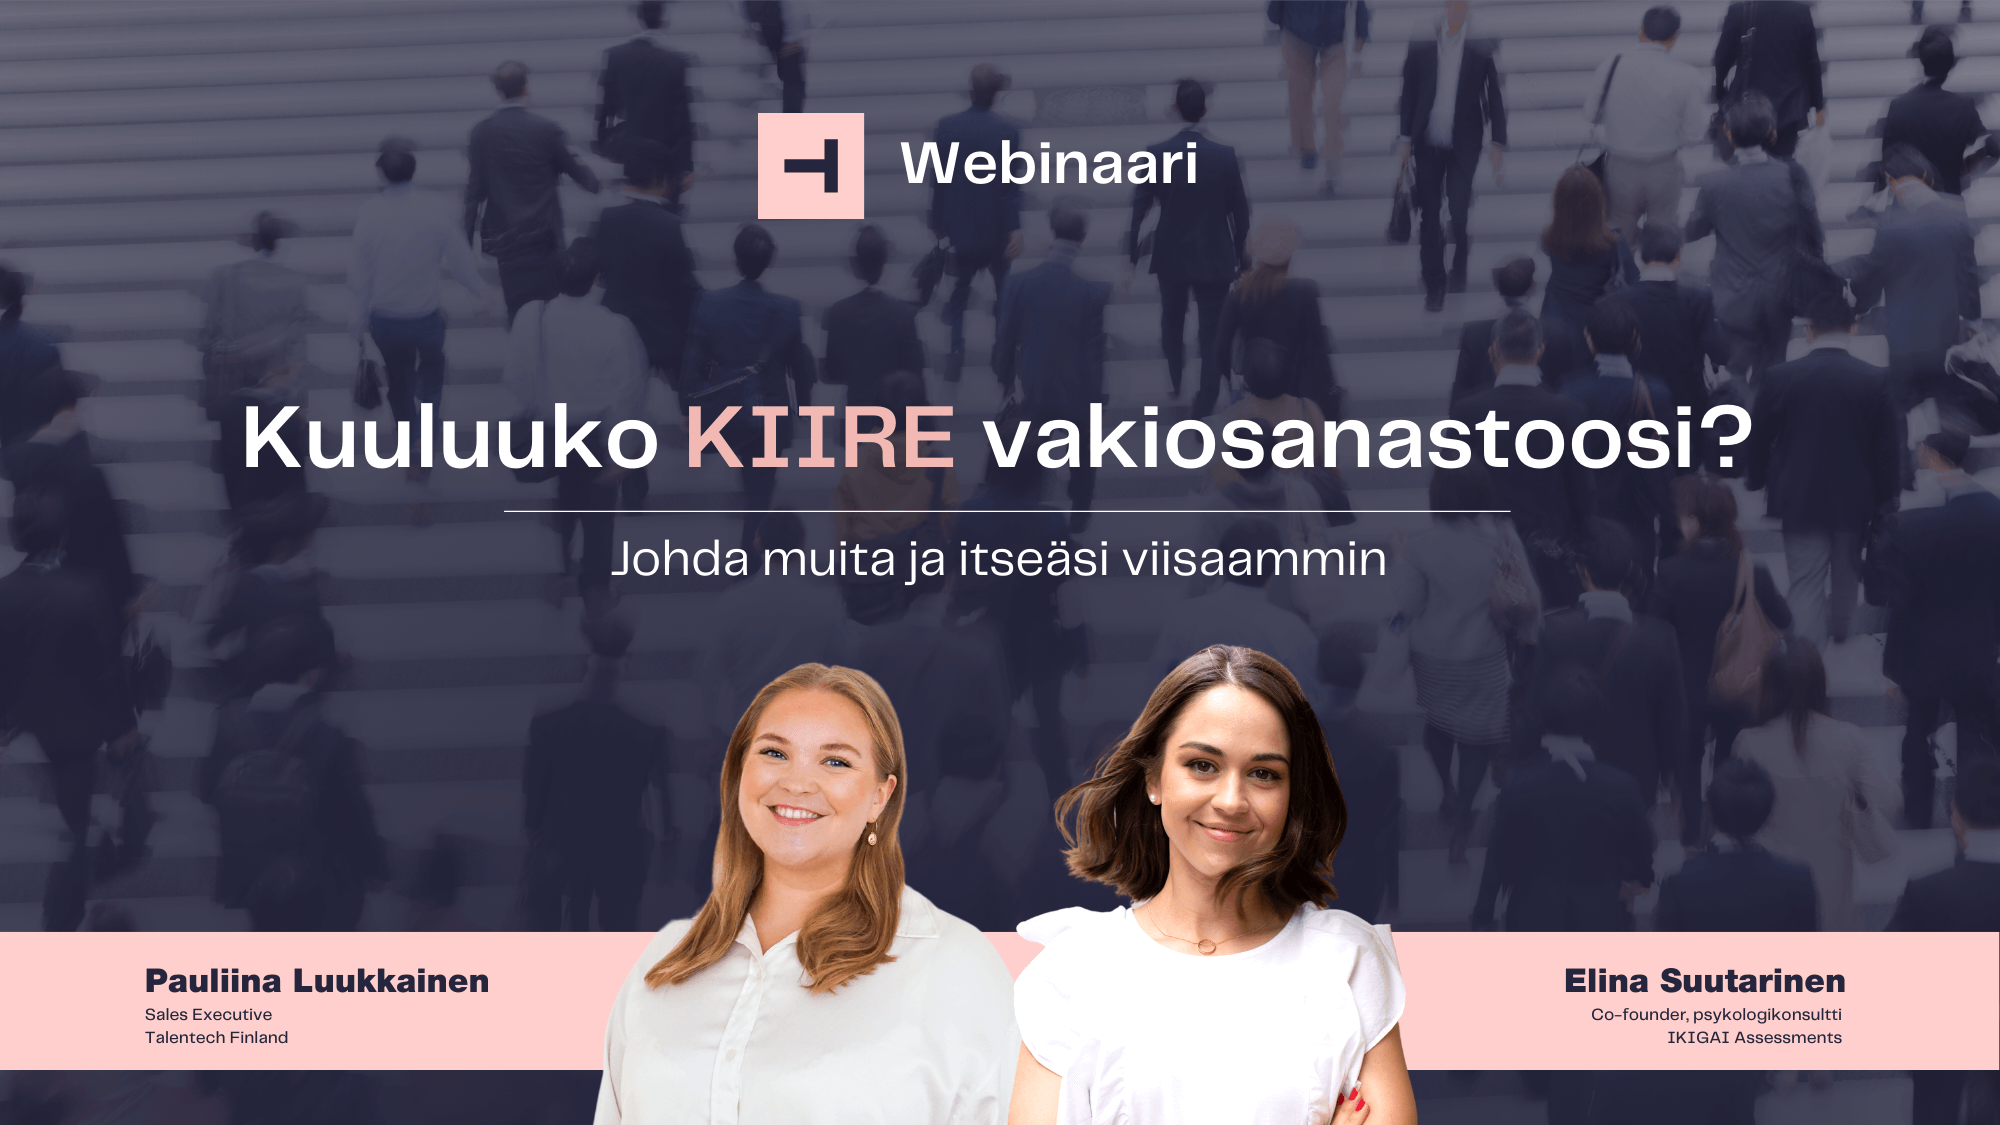 https://video.talentech.com/webinaari-kuuluuko-kiire/join